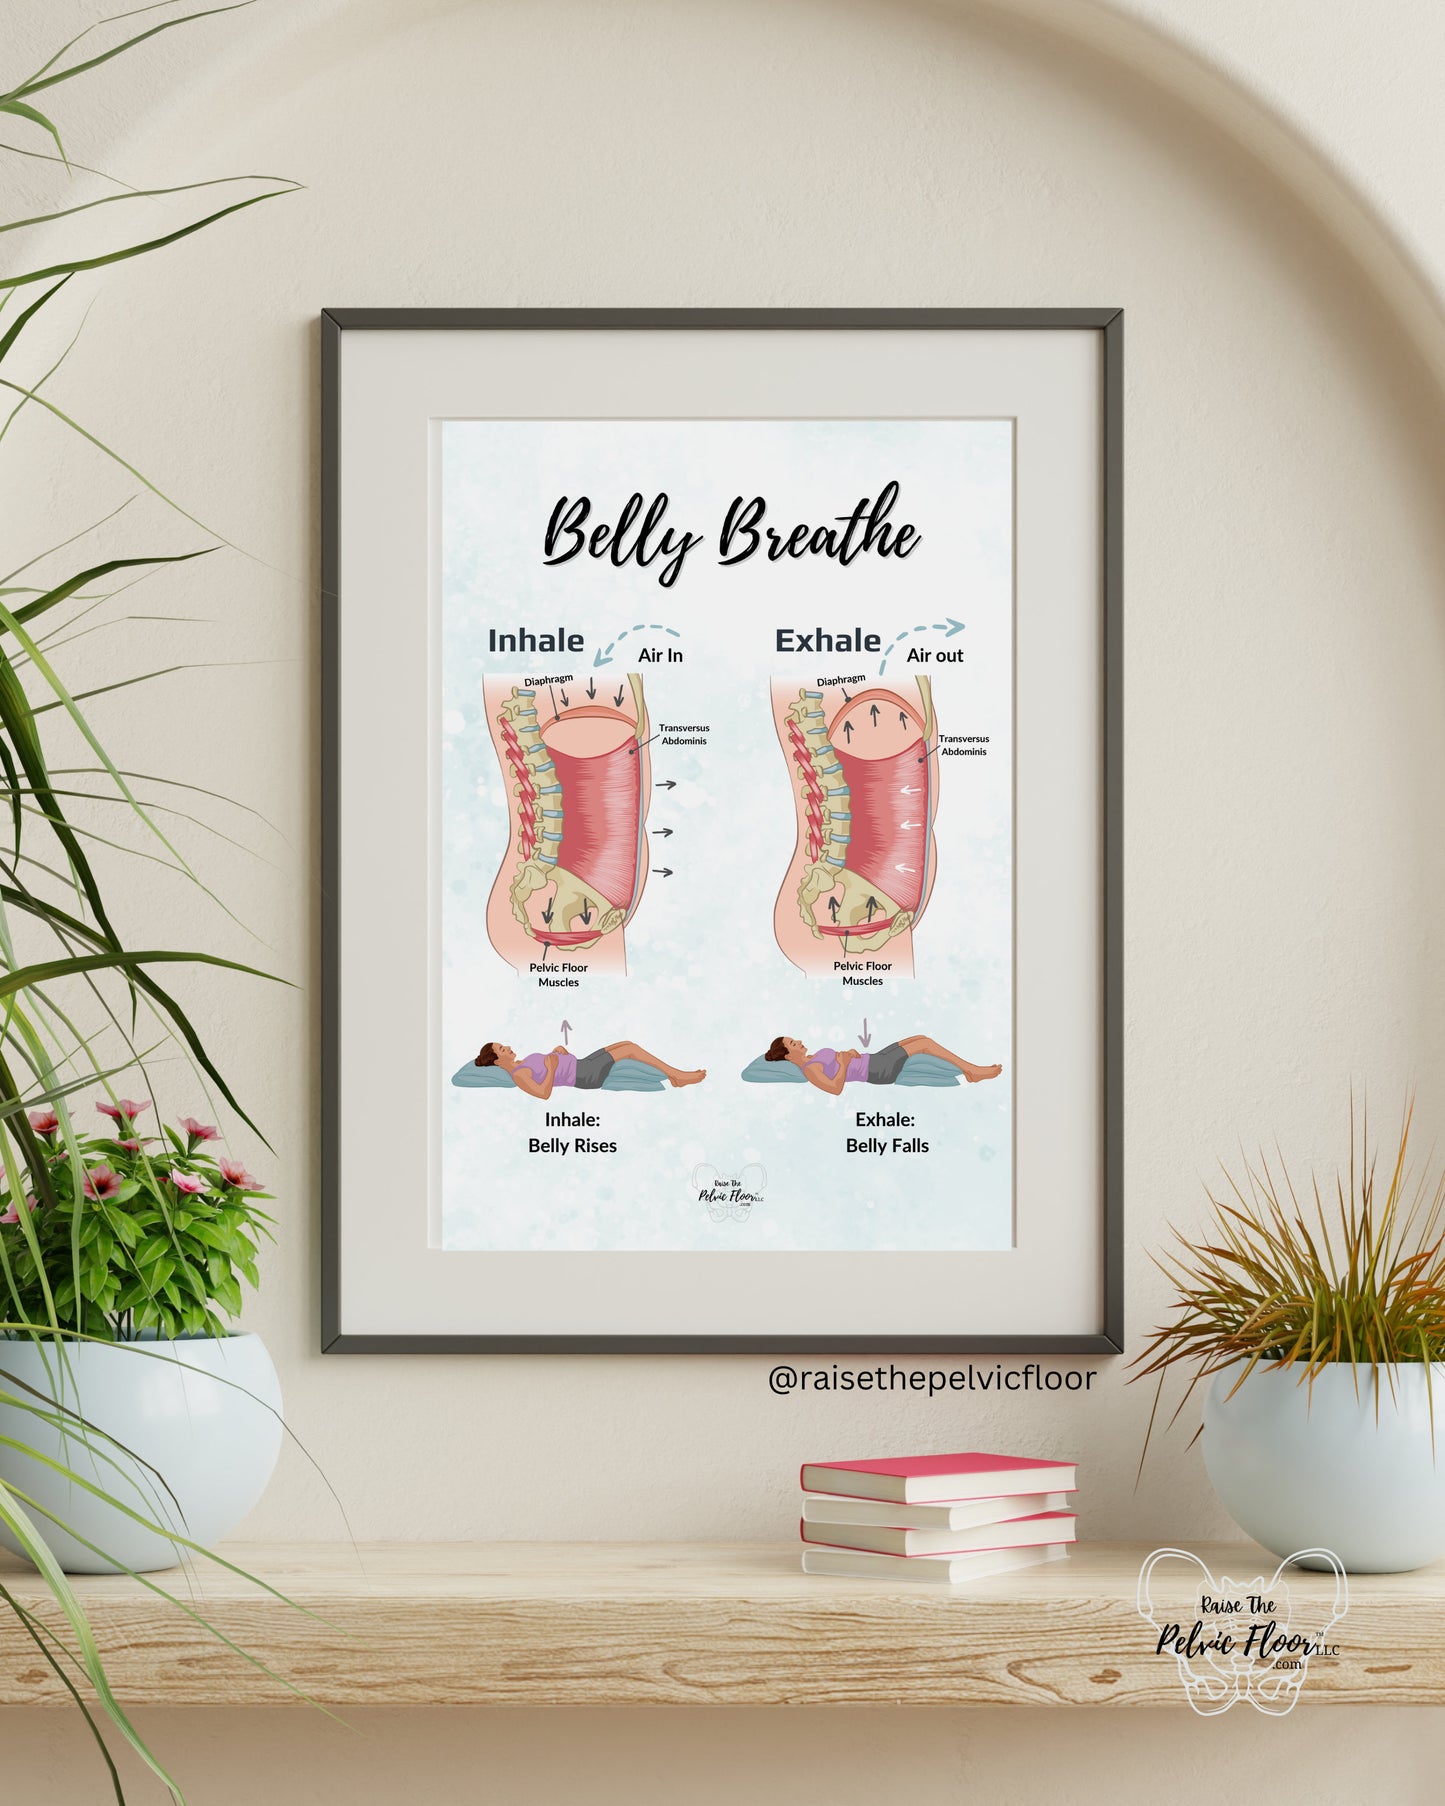 Belly Breathe Pathophysiology Inhale Exhale Education Poster | Pelvic Floor, Diaphragm, Breath, Belly Rise, Relax, Yoga, Meditation